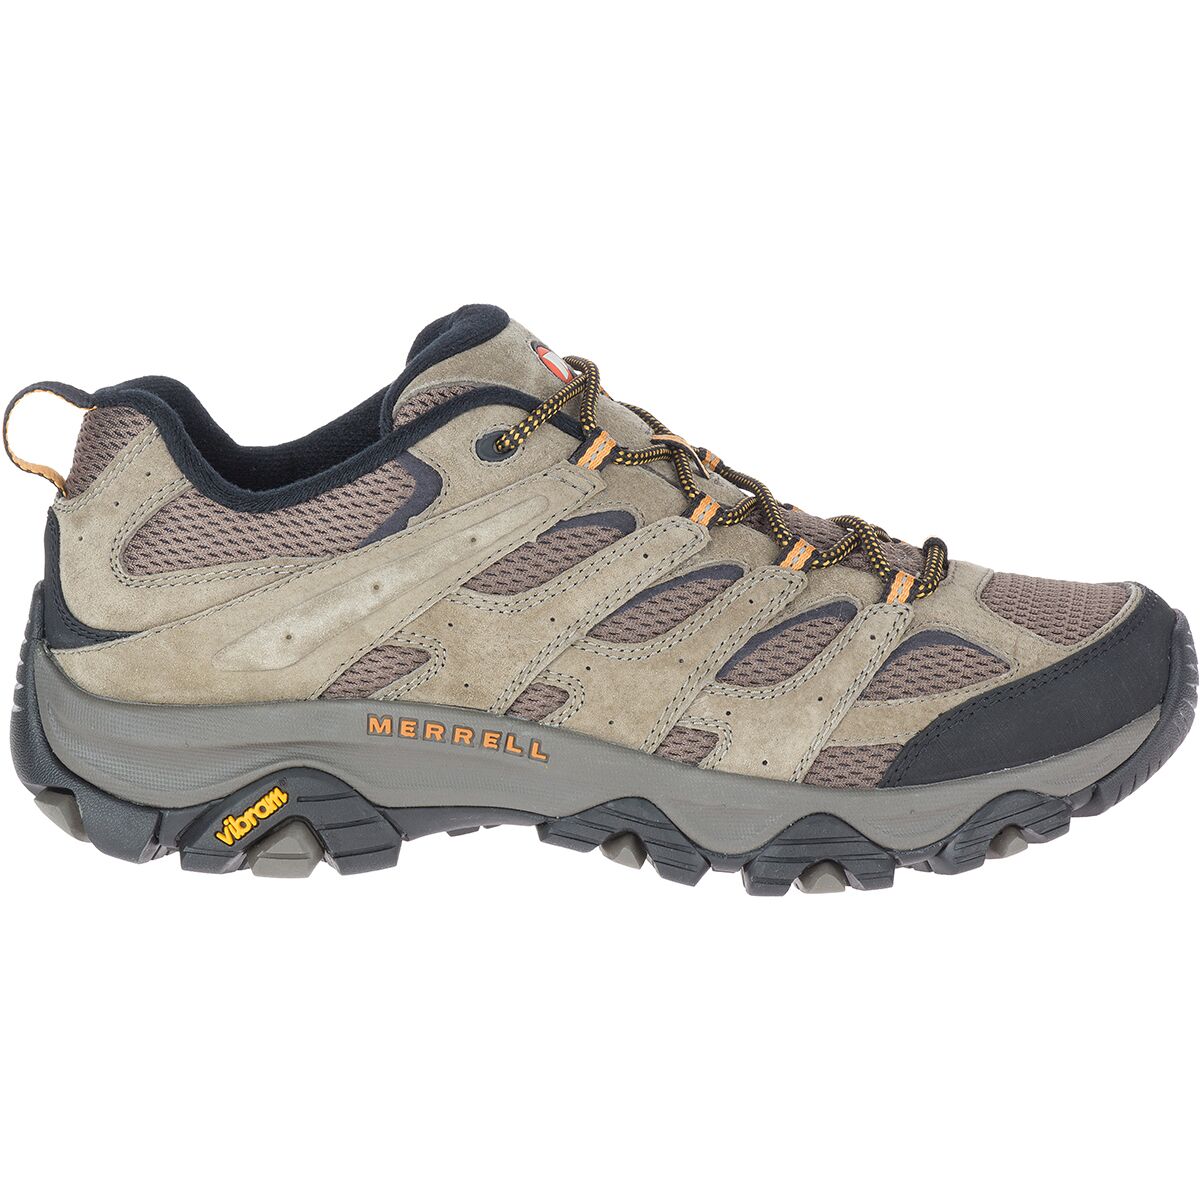 Merrell Moab 3 Wide Hiking Shoe - Men's